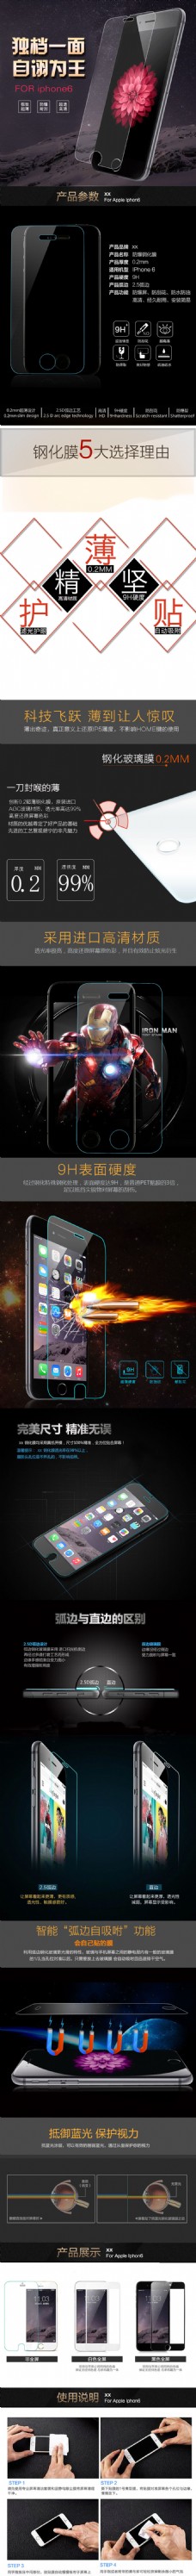 iphone6手机膜设计